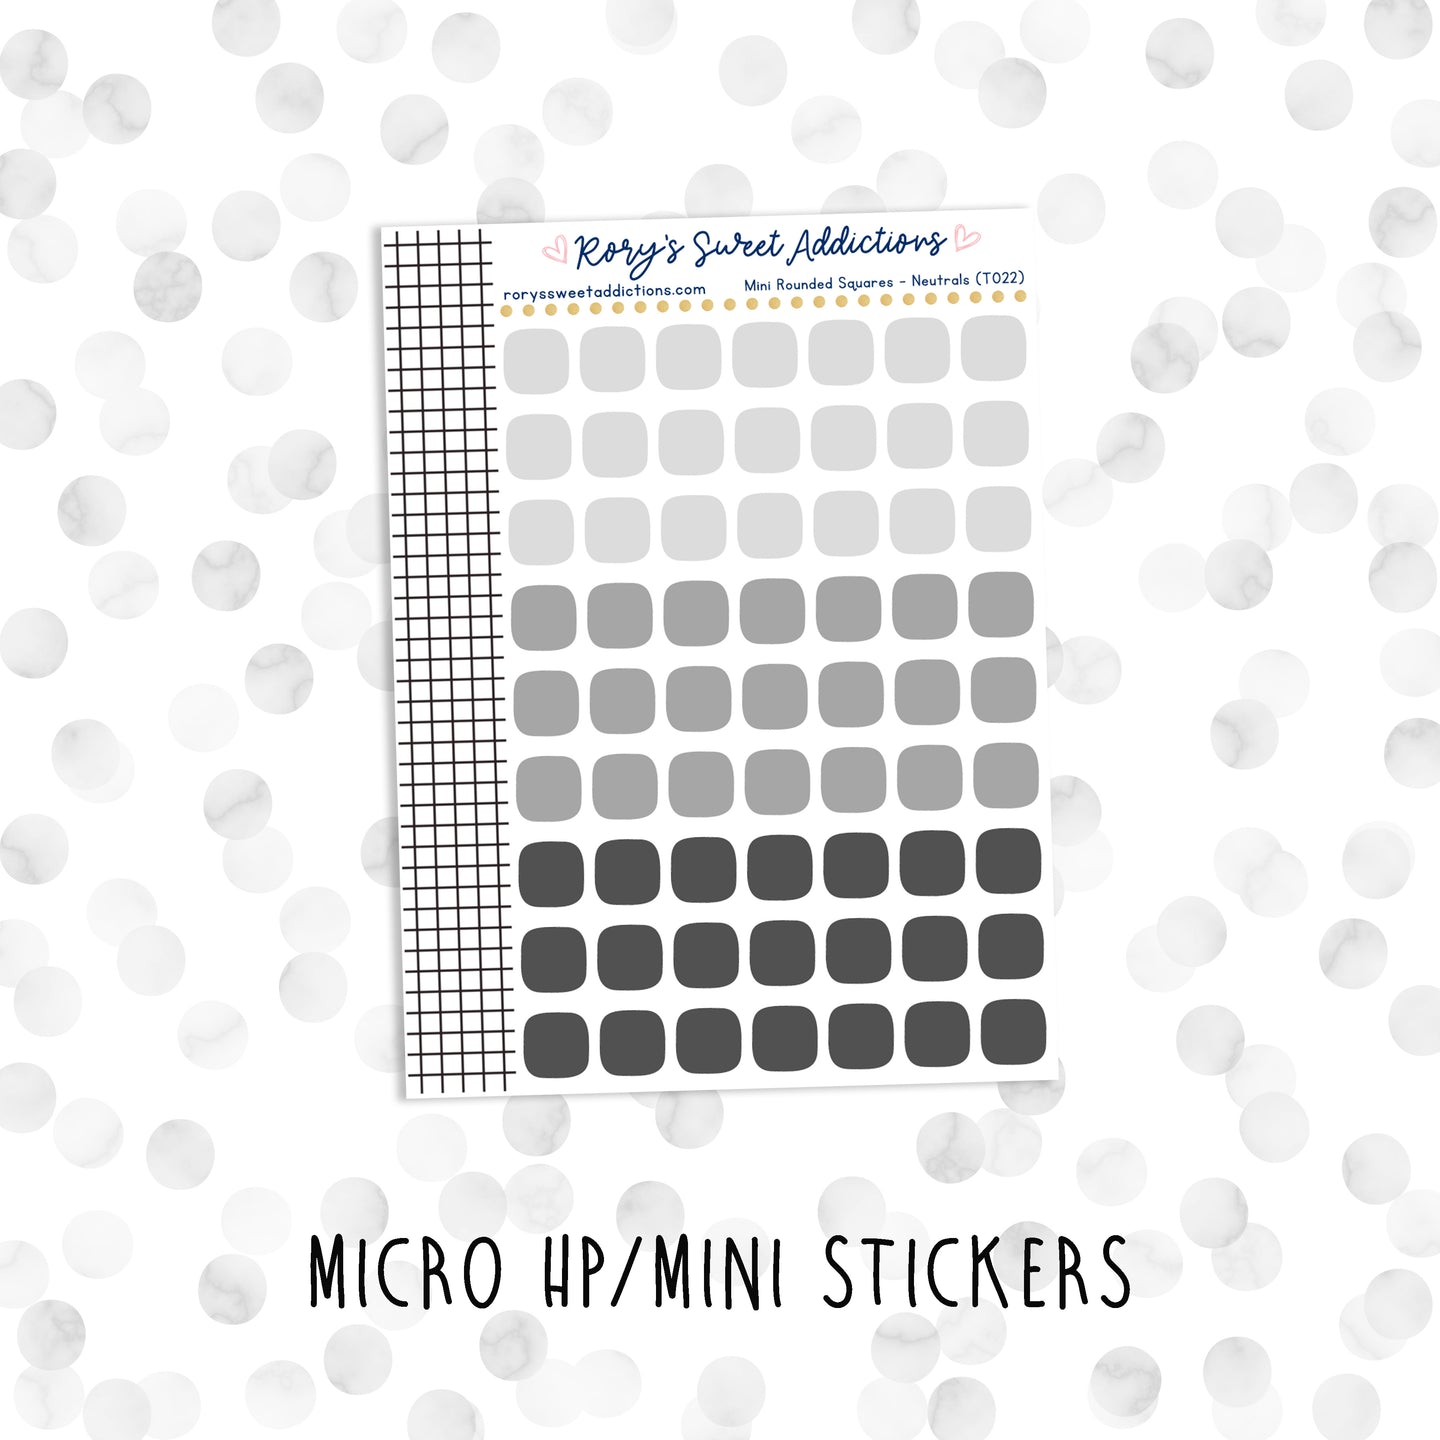 Mini Rounded Squares - Neutrals // Micro HP - Mini Stickers